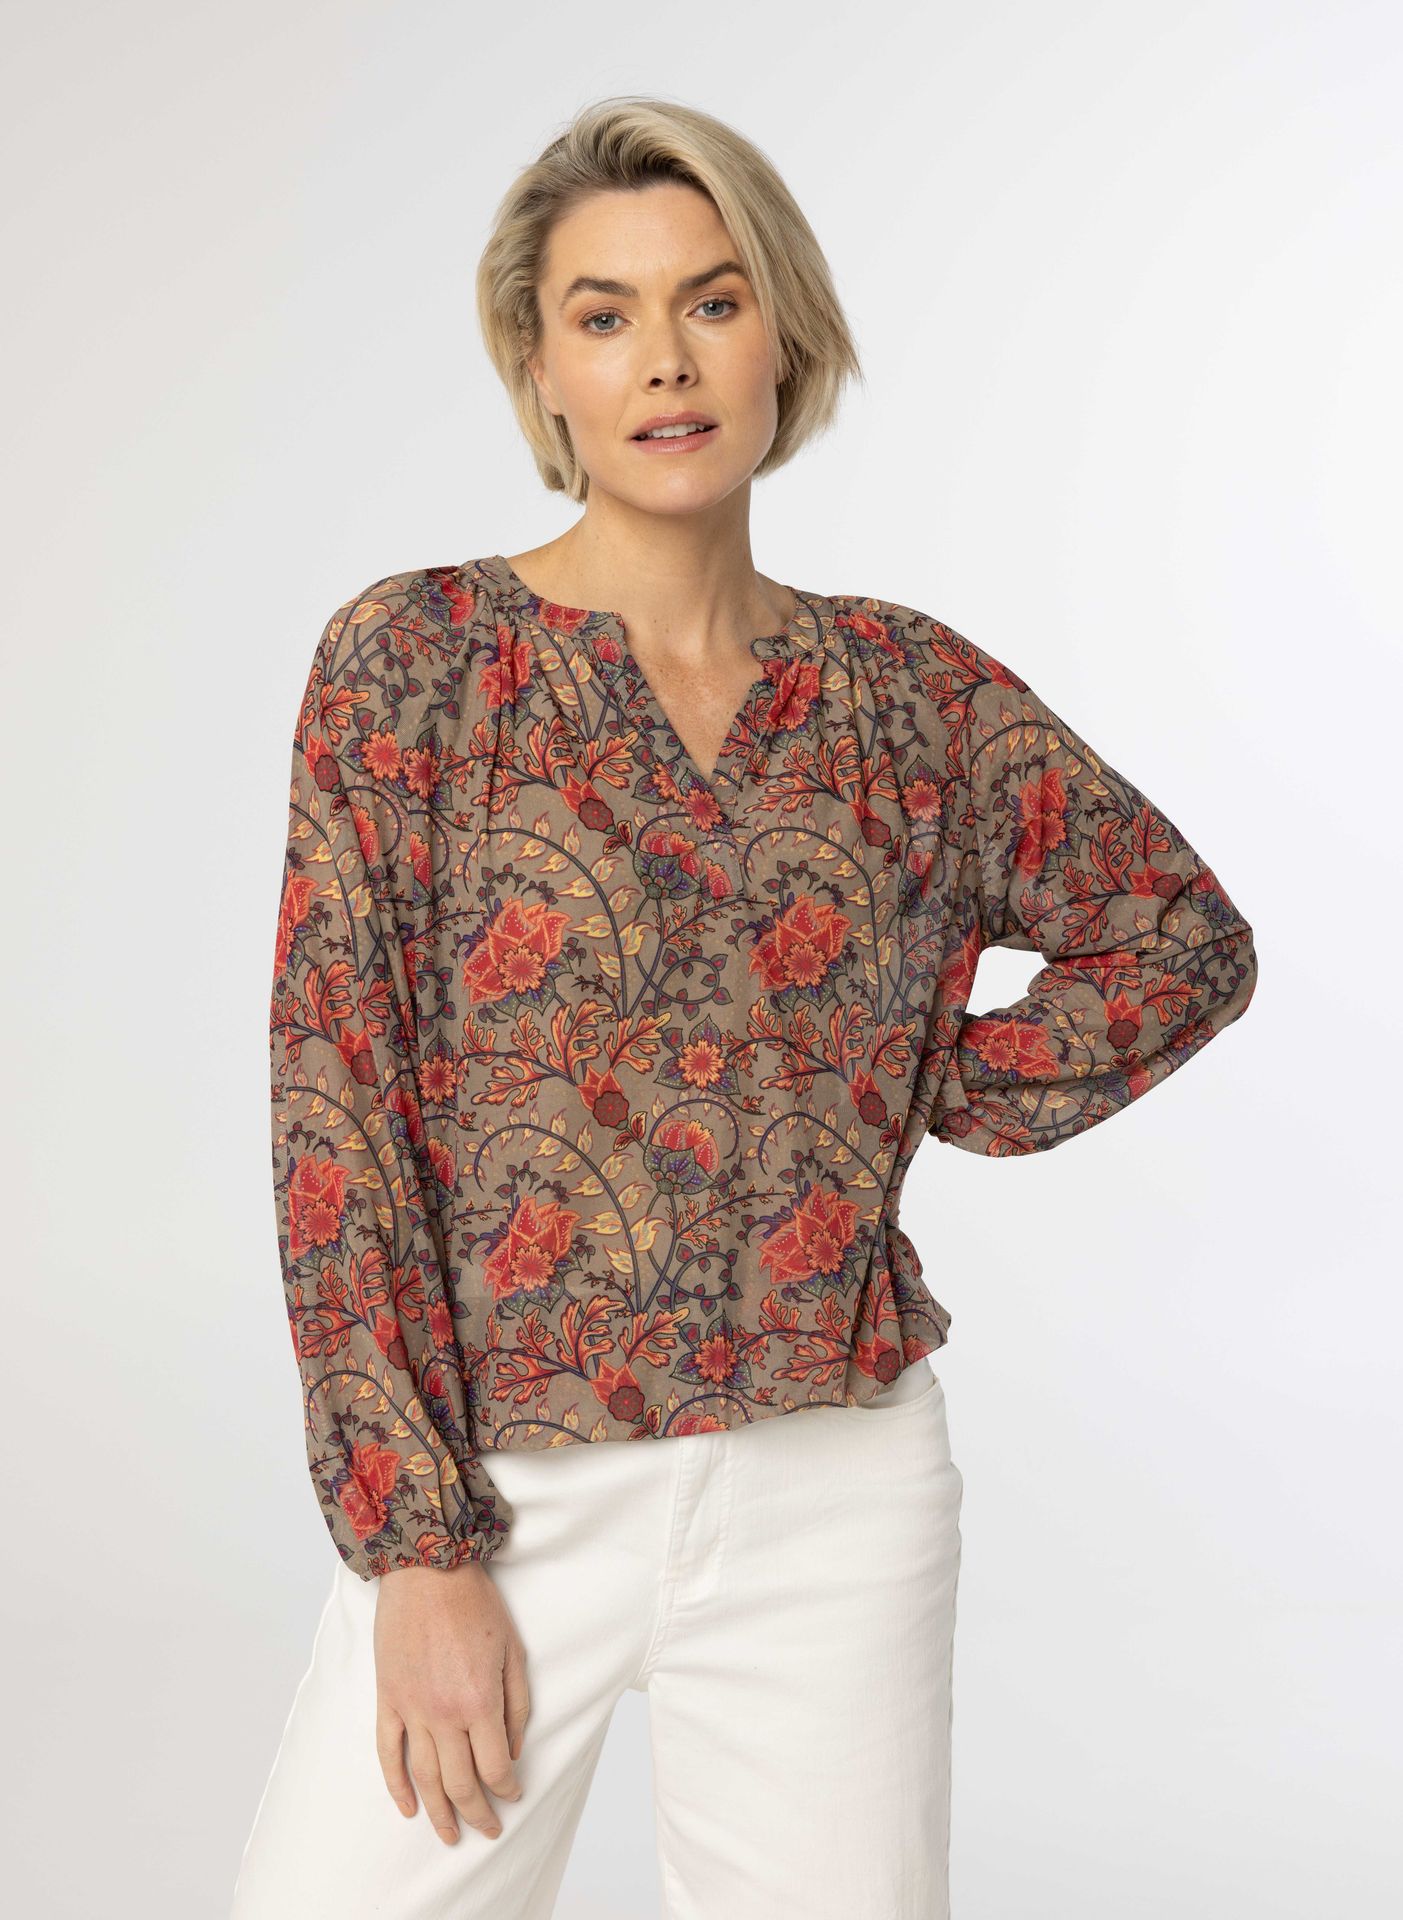 Norah Meerkleurige blouse multicolor 214121-002-36